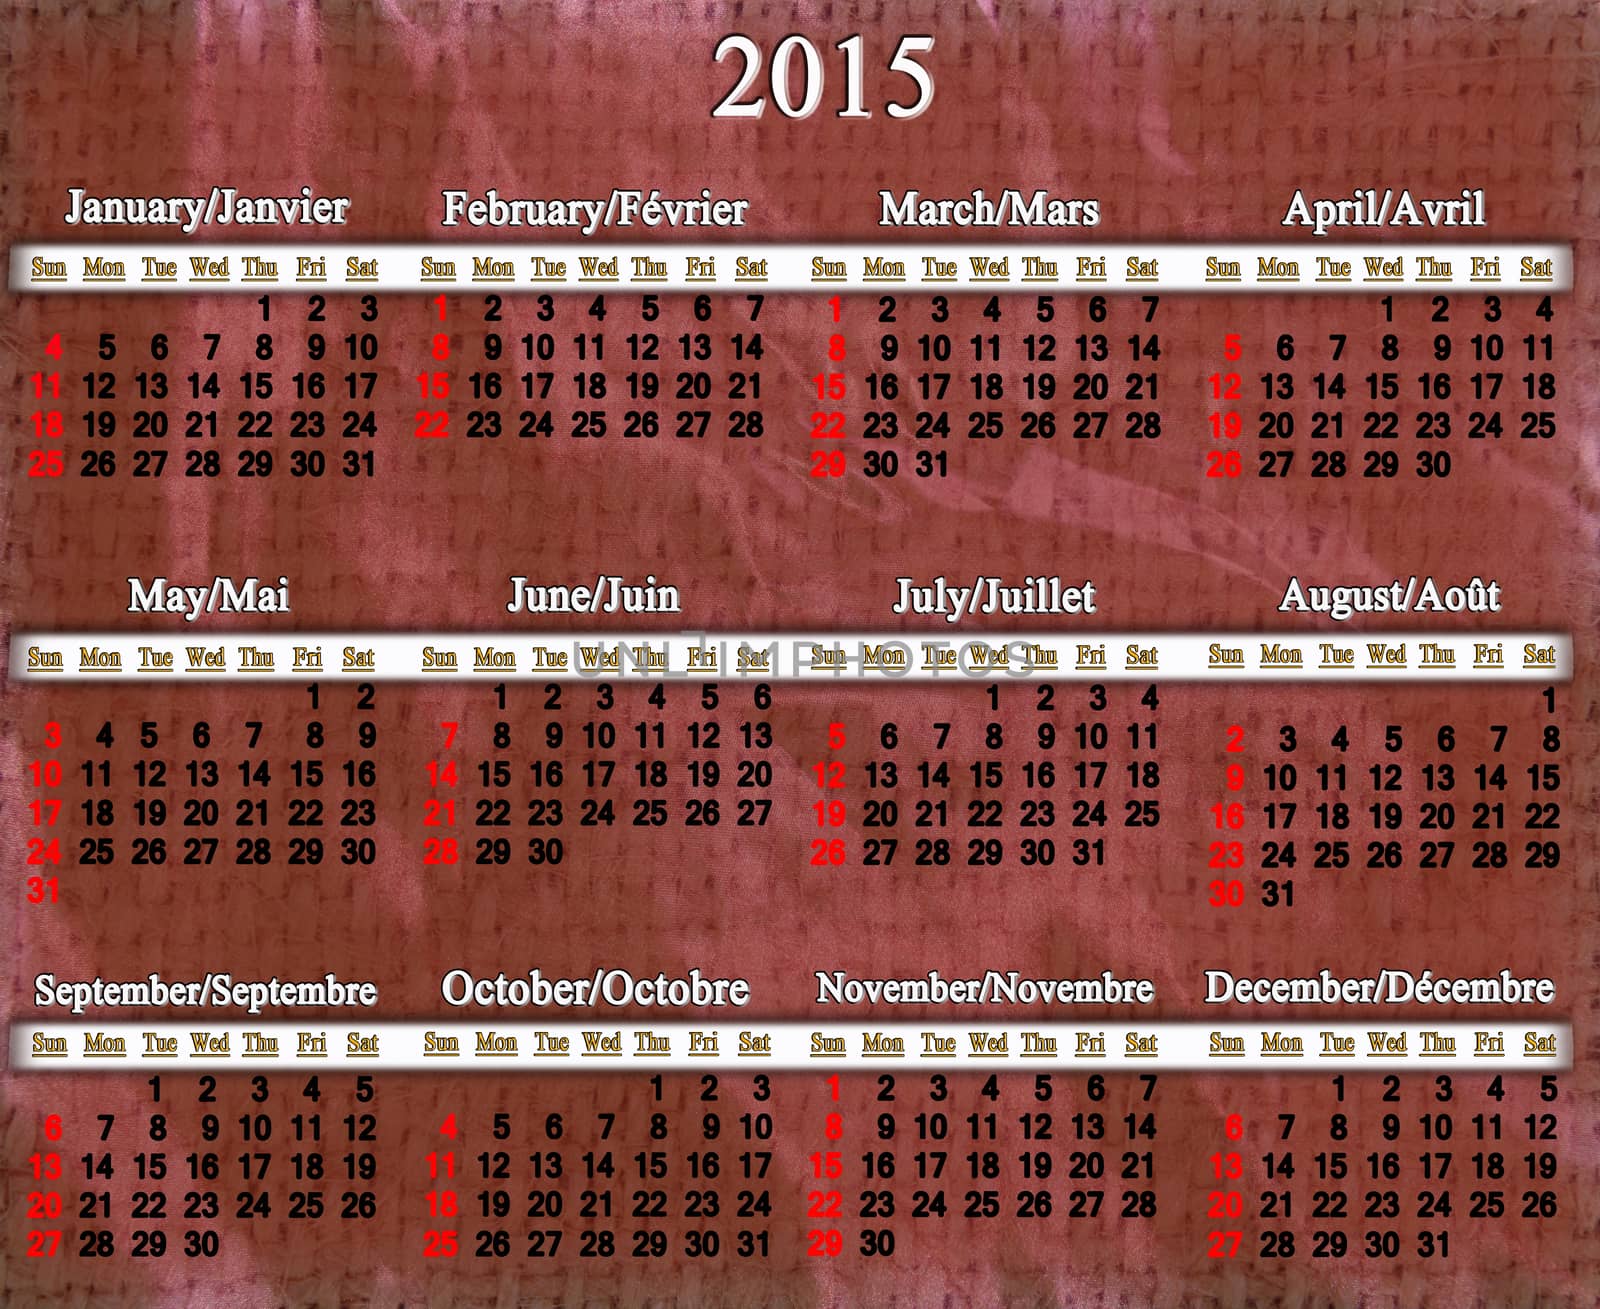 calendar for 2015 year on lilac trodden pattern